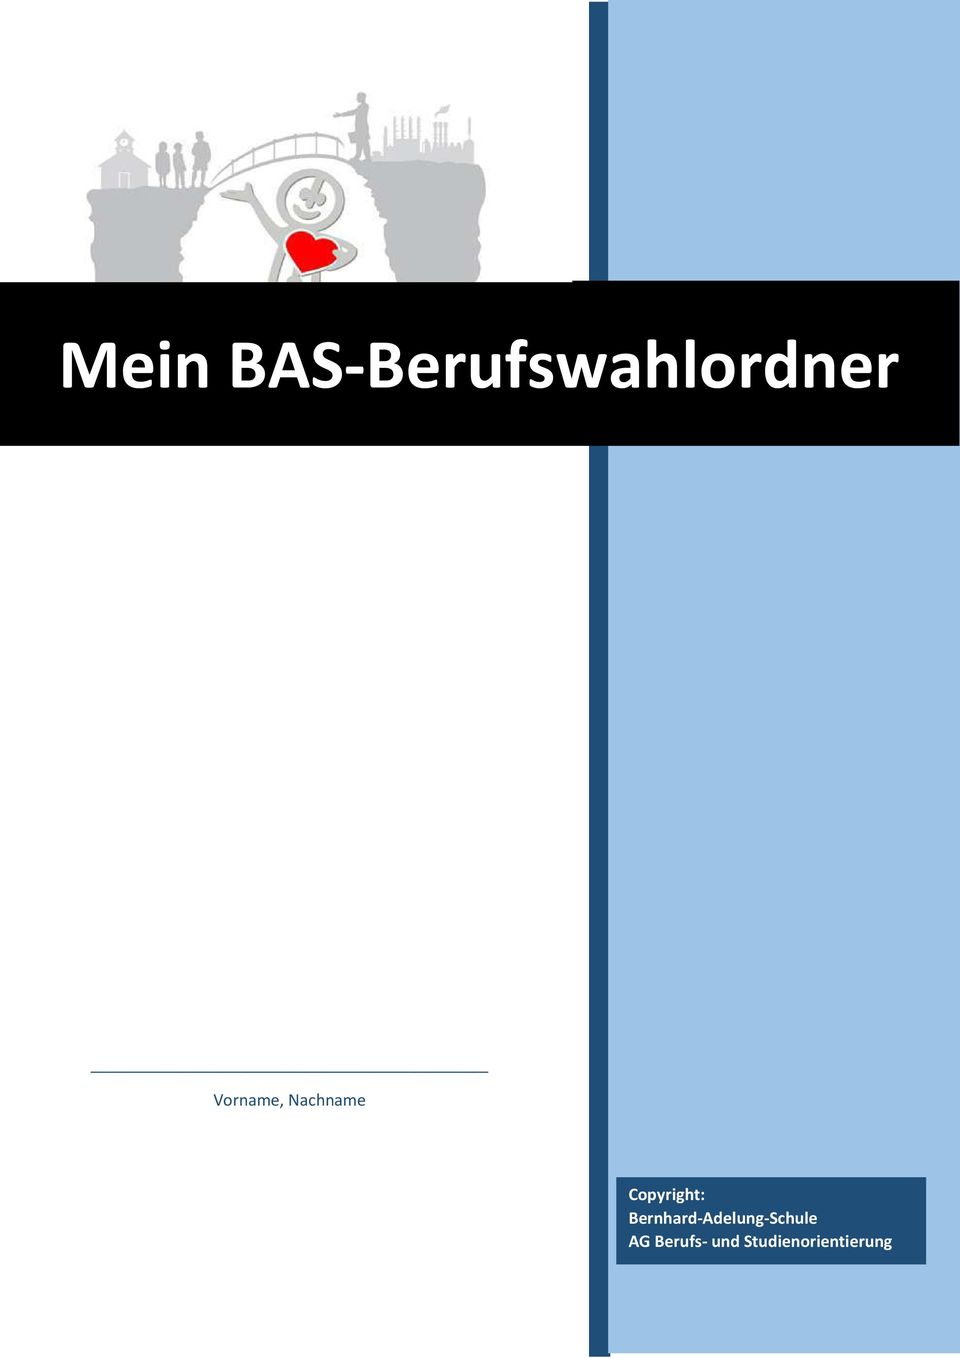 Bernhard-Adelung-Schule AG